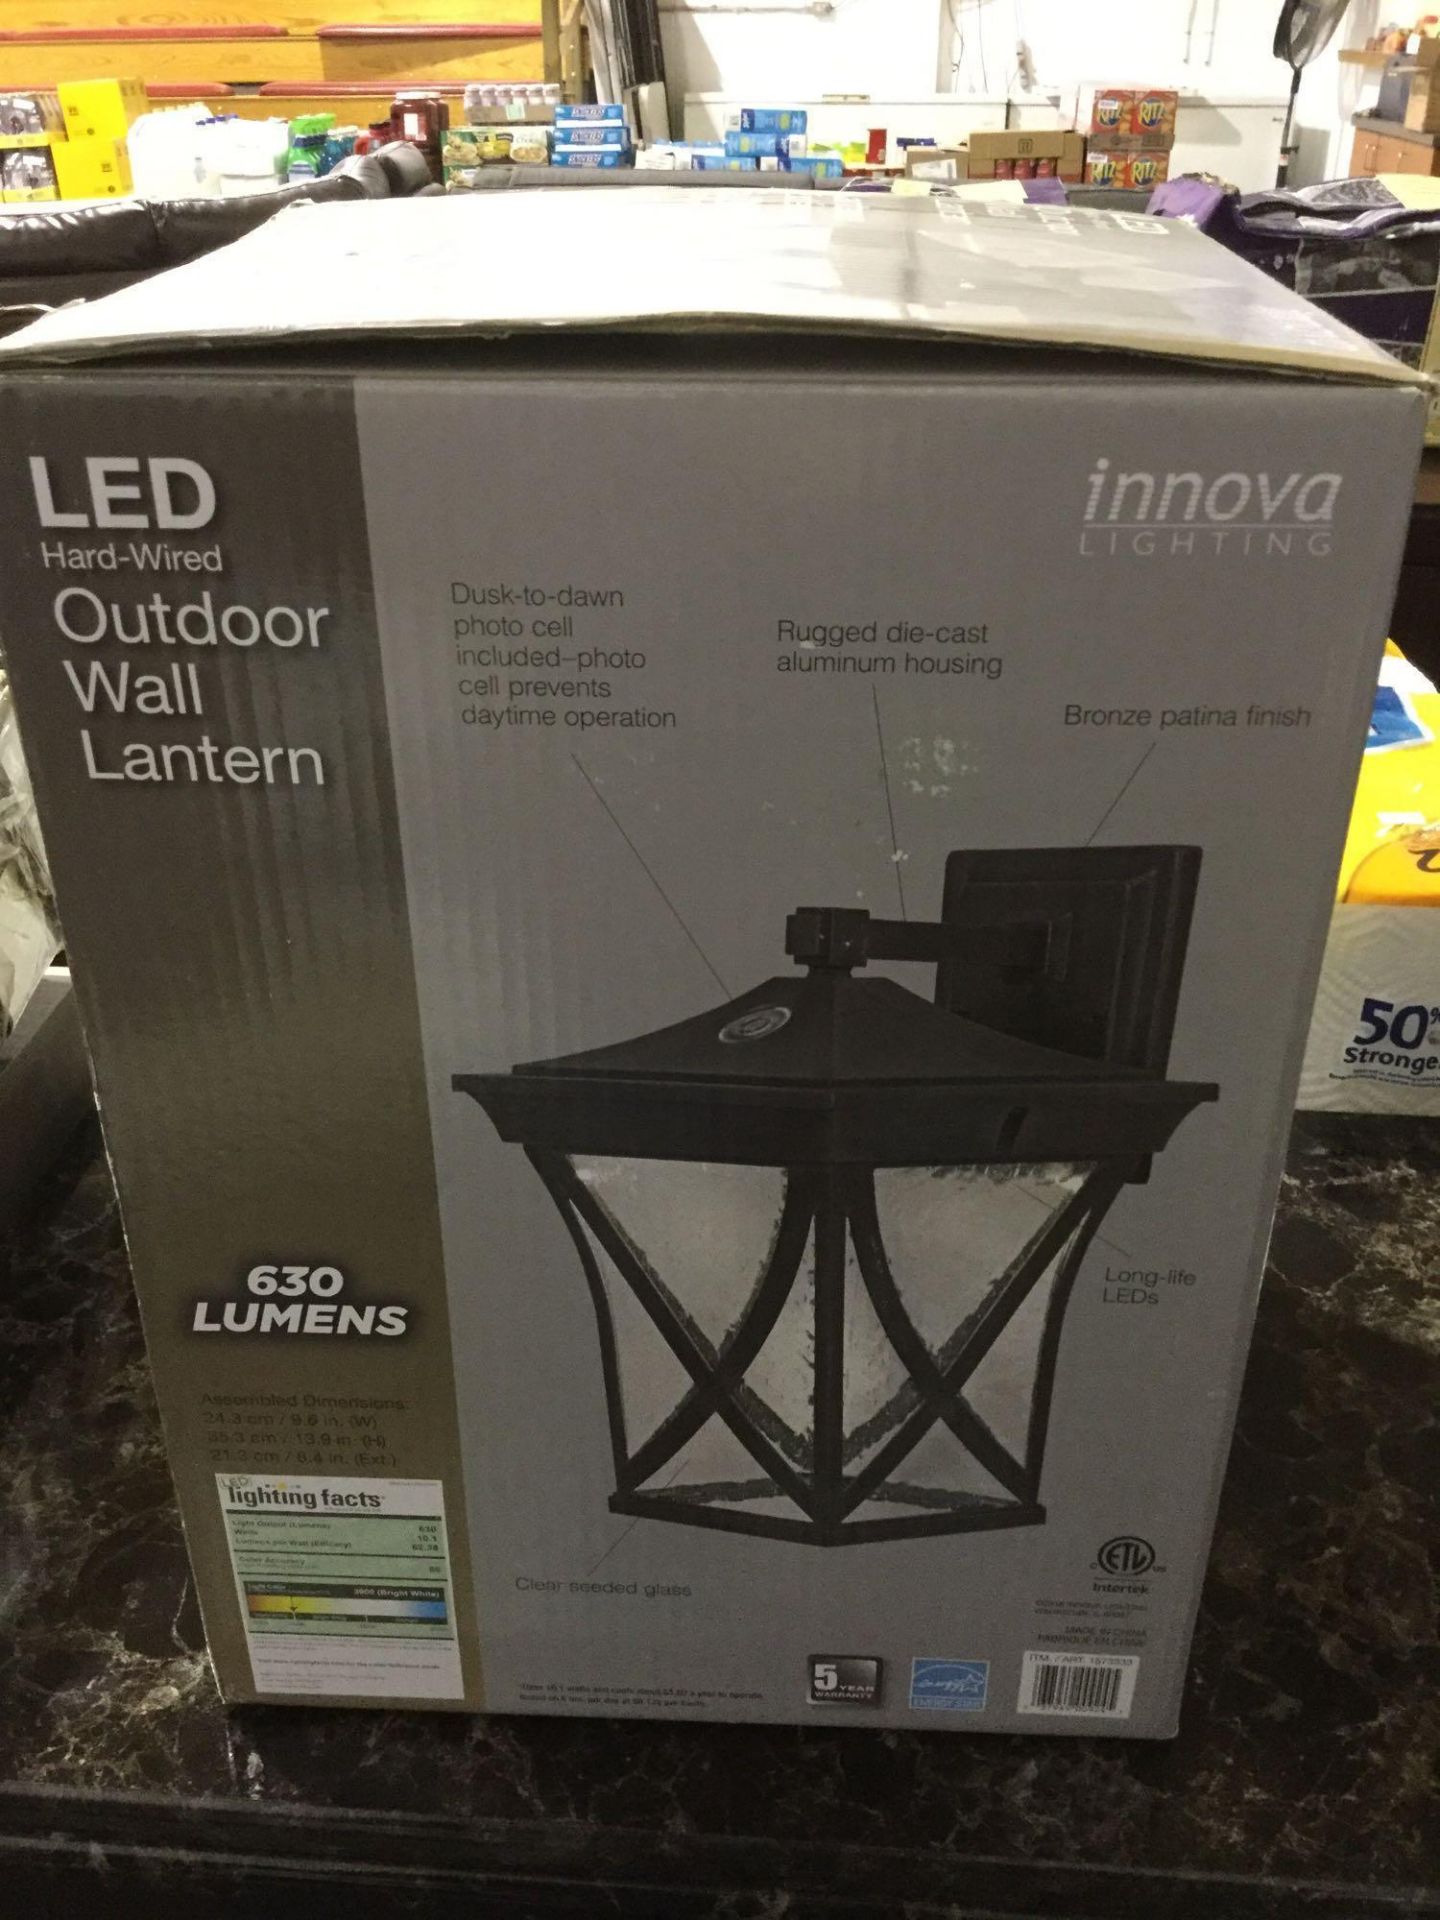 Innova Lighting LED Hard-Wired Outdoor Wall Lantern